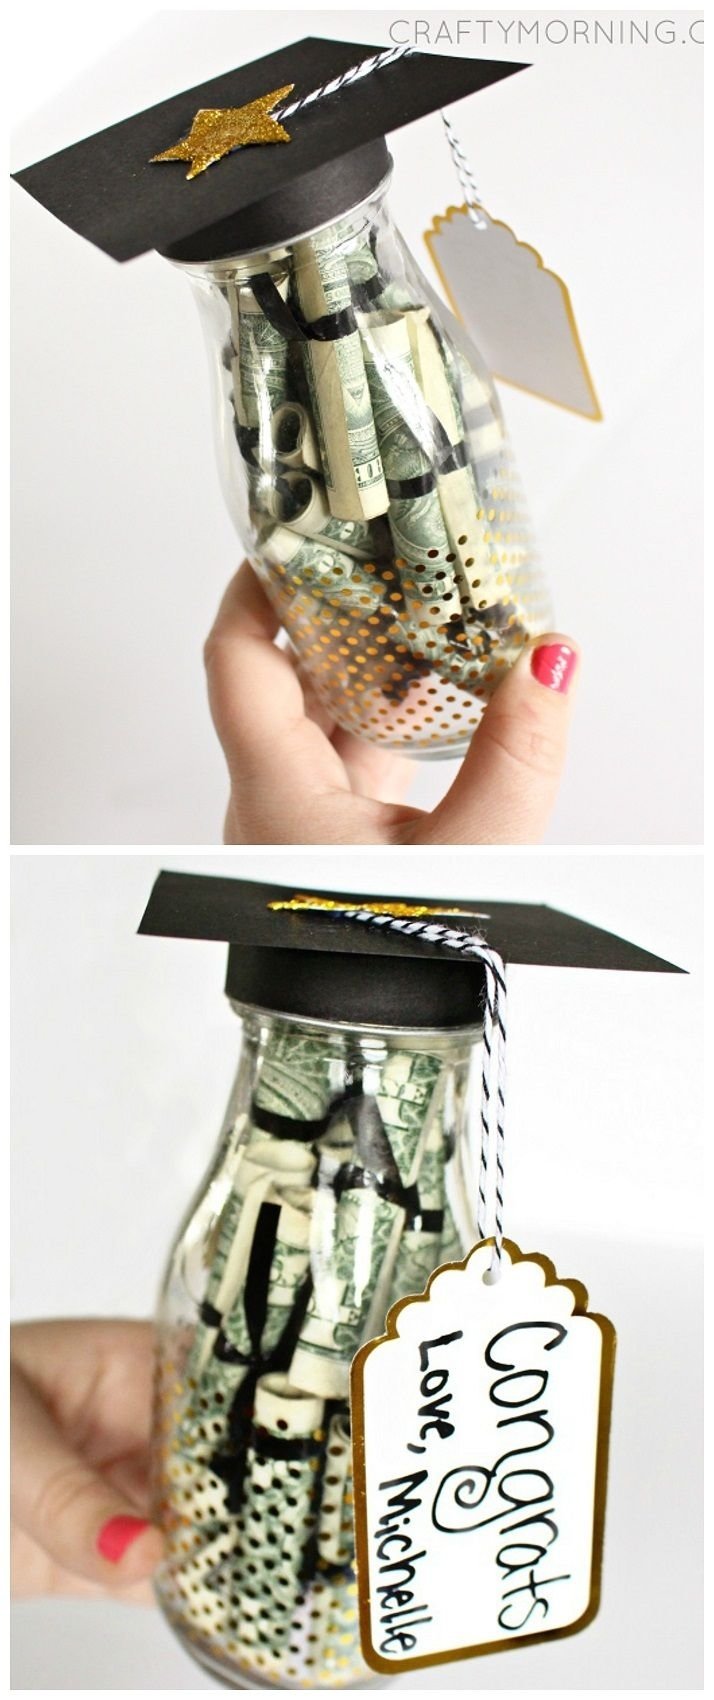 10 Spectacular Law School Graduation Gift Ideas 276 best graduation gift ideas images on pinterest cute ideas 2022